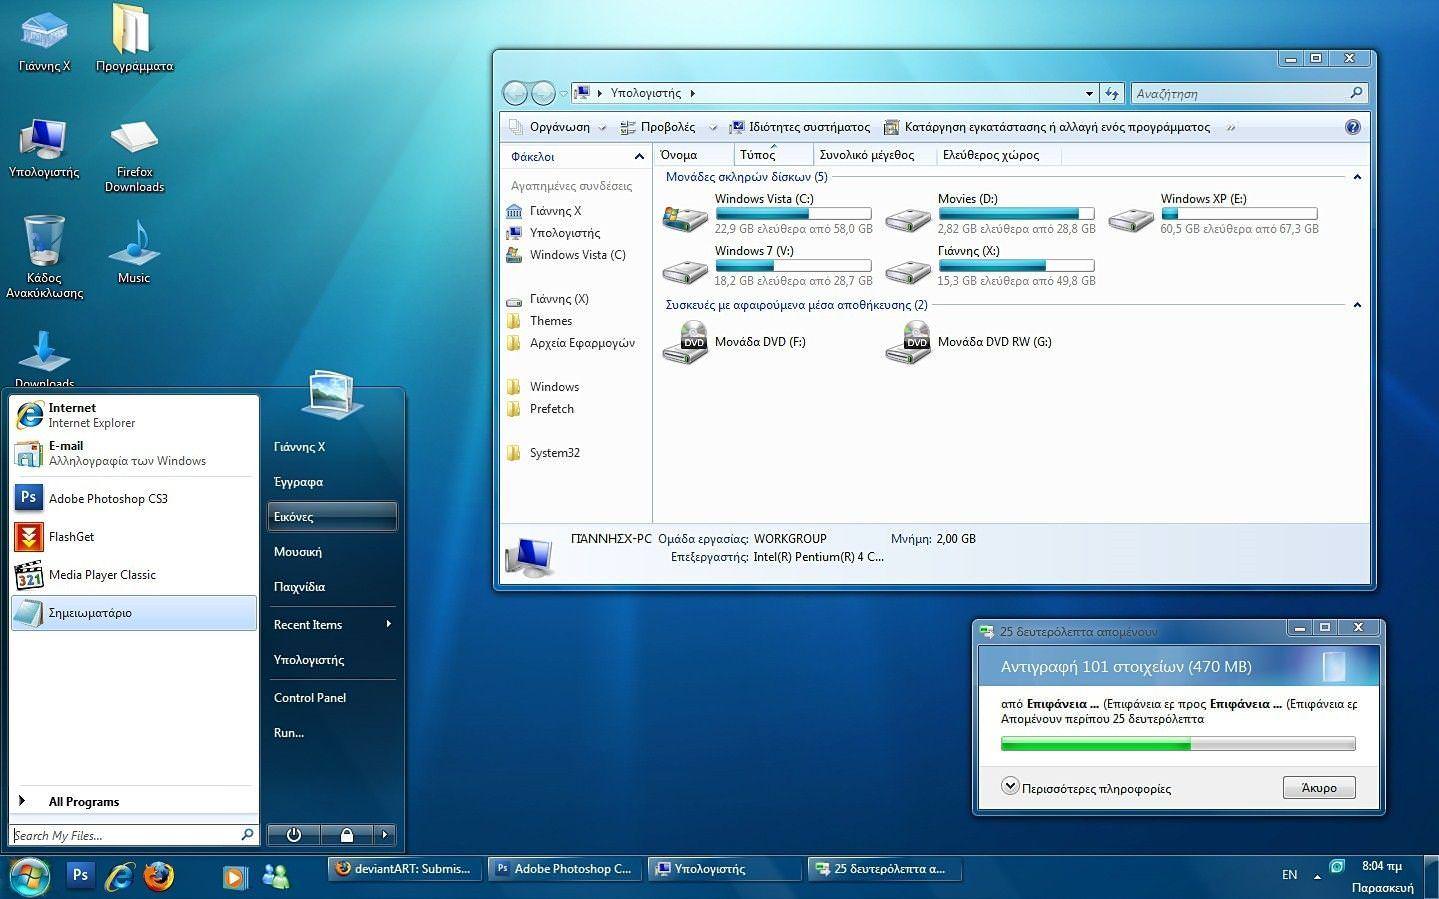 Microsoft word 2003 free download for windows 10 64 bit